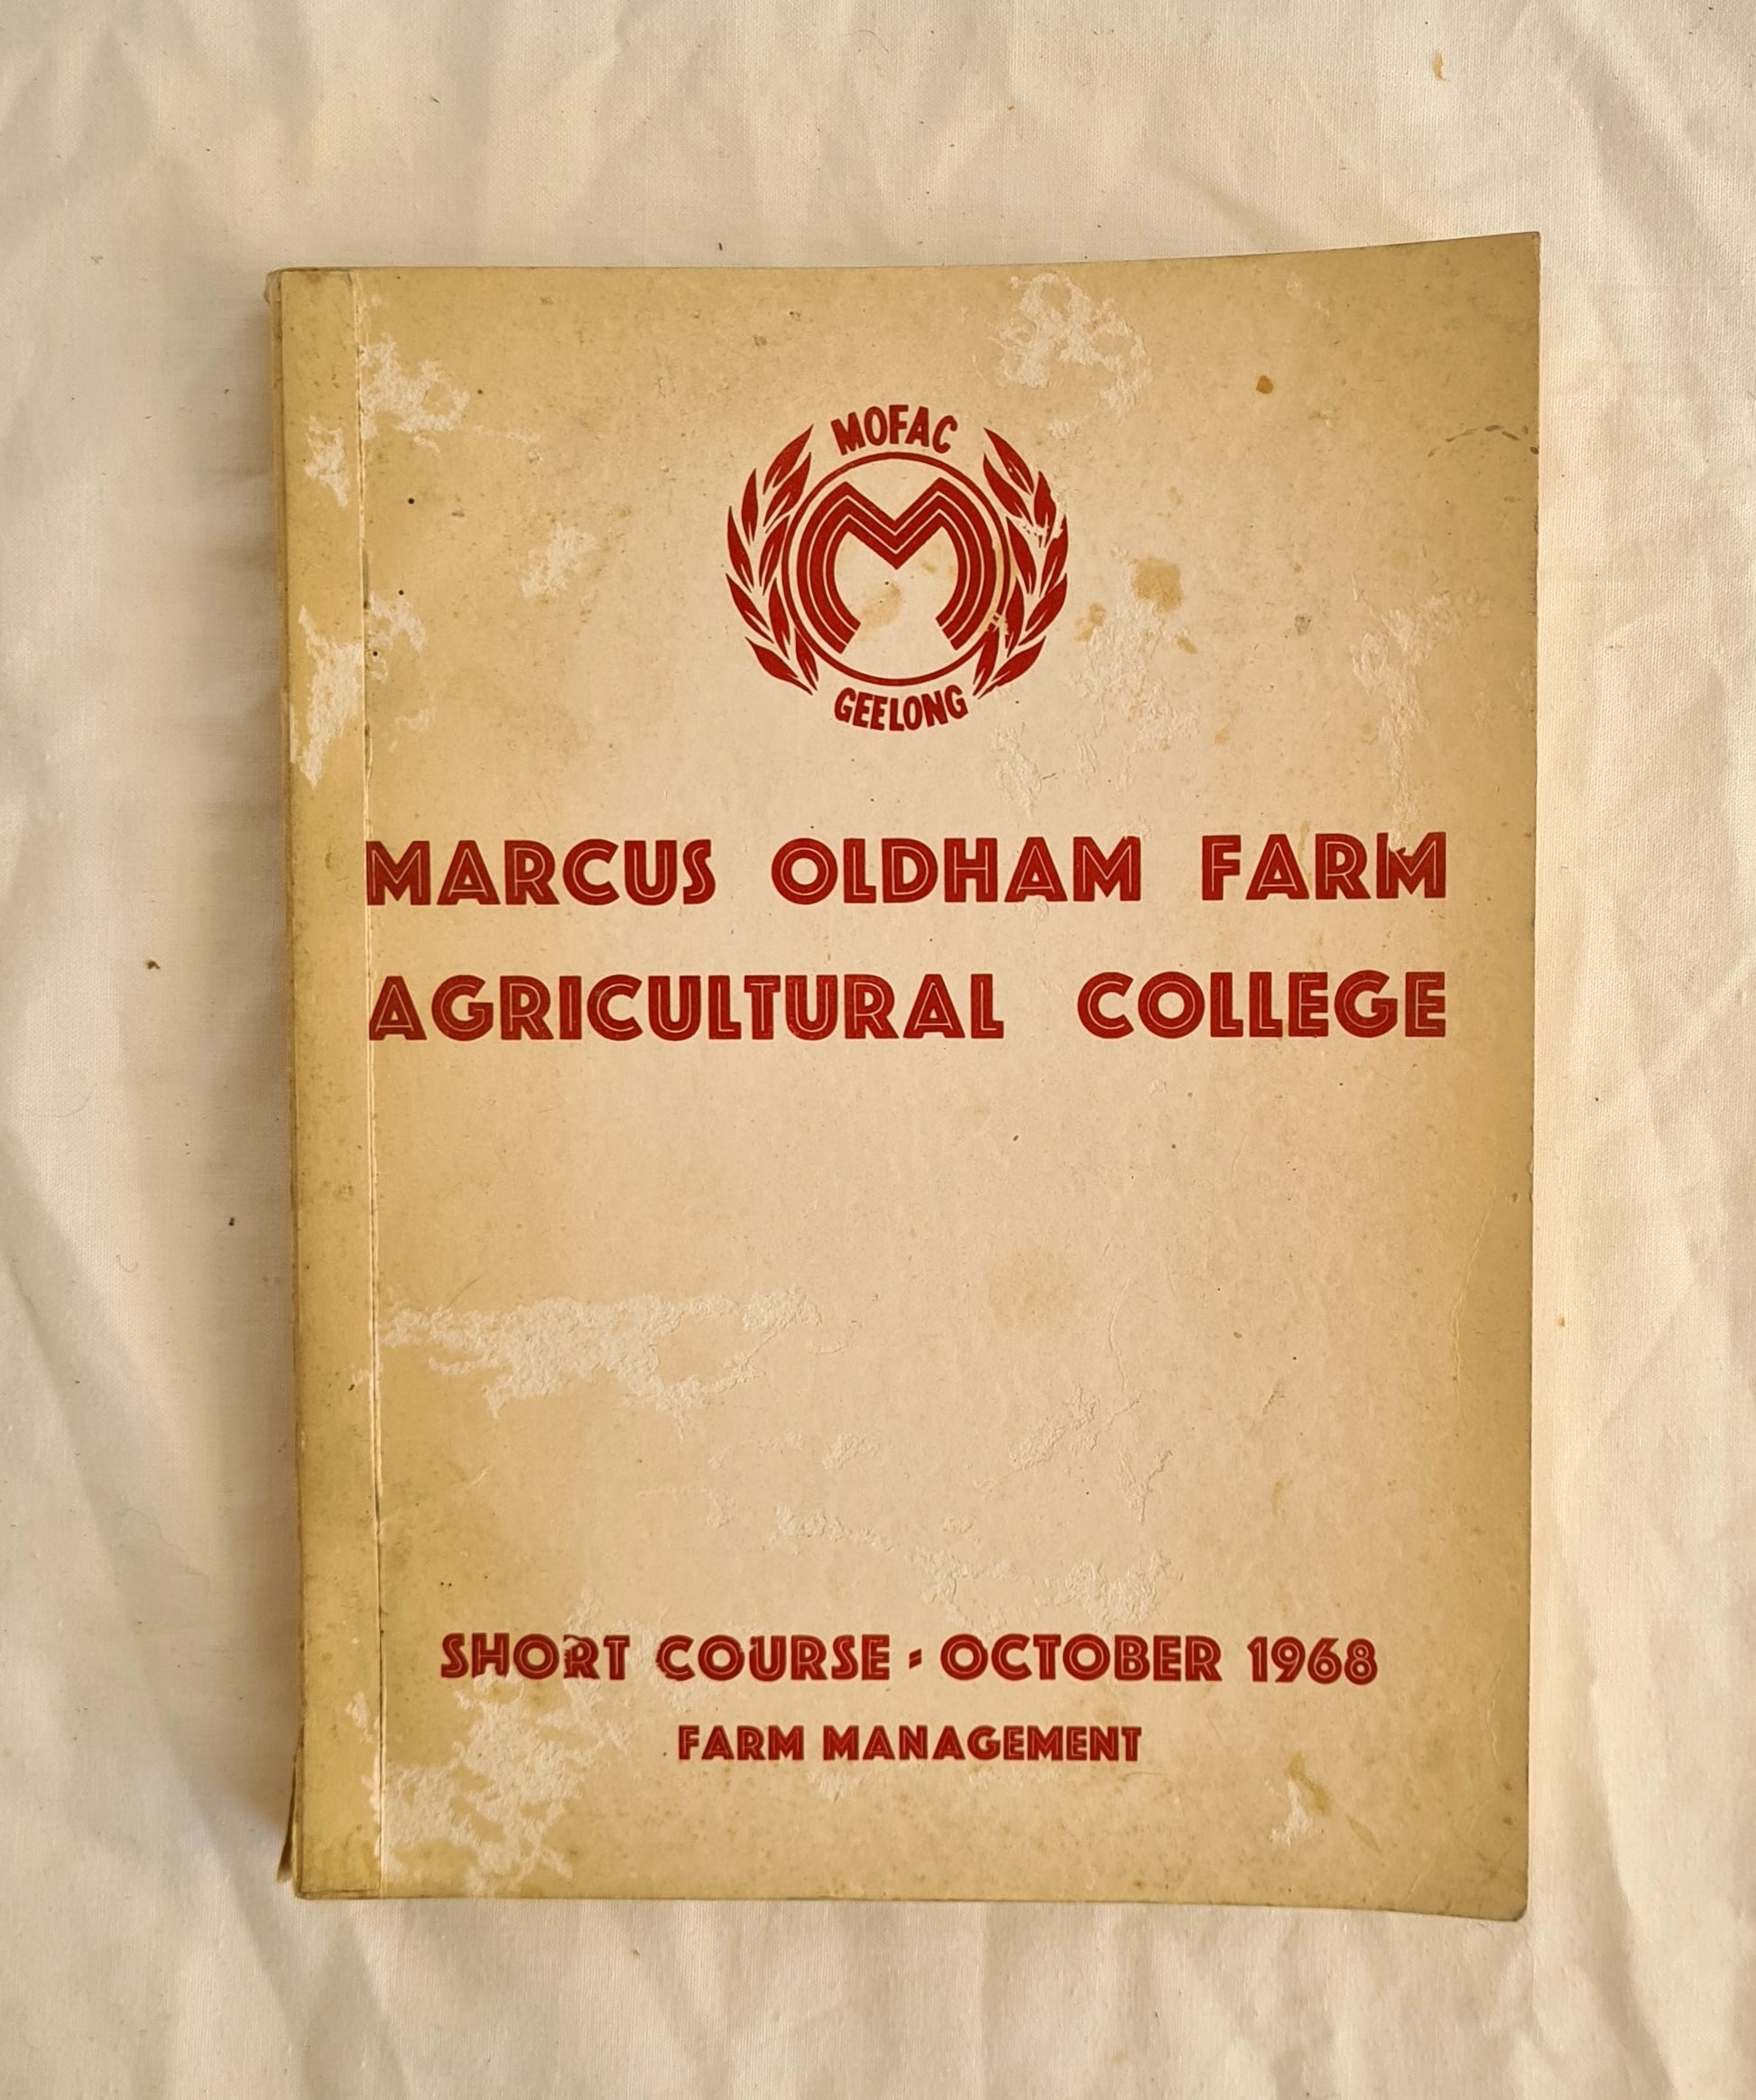 Farm Management 1968  Marcus Oldam Farm Agricultural College  Short Course – October 1968 (Farm Management)